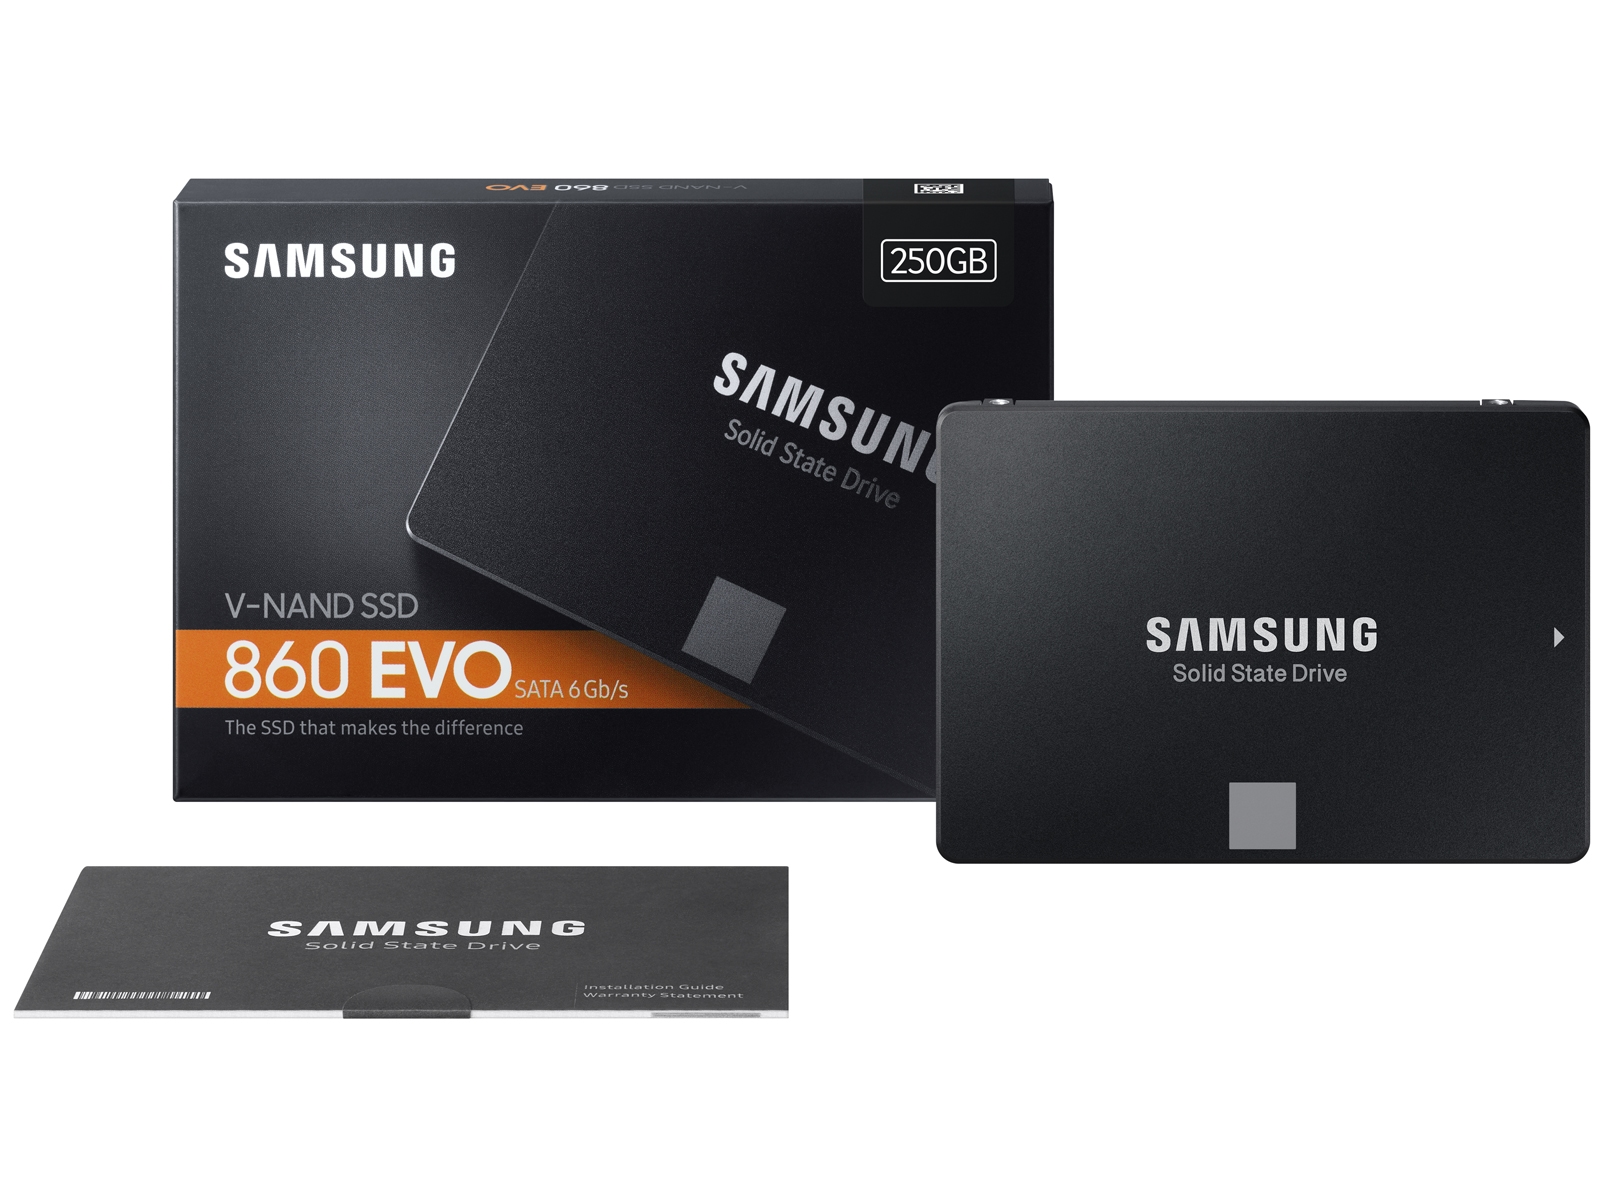 SSD 860 EVO 2.5" SATA III 250GB & Storage - MZ-76E250B/AM | US